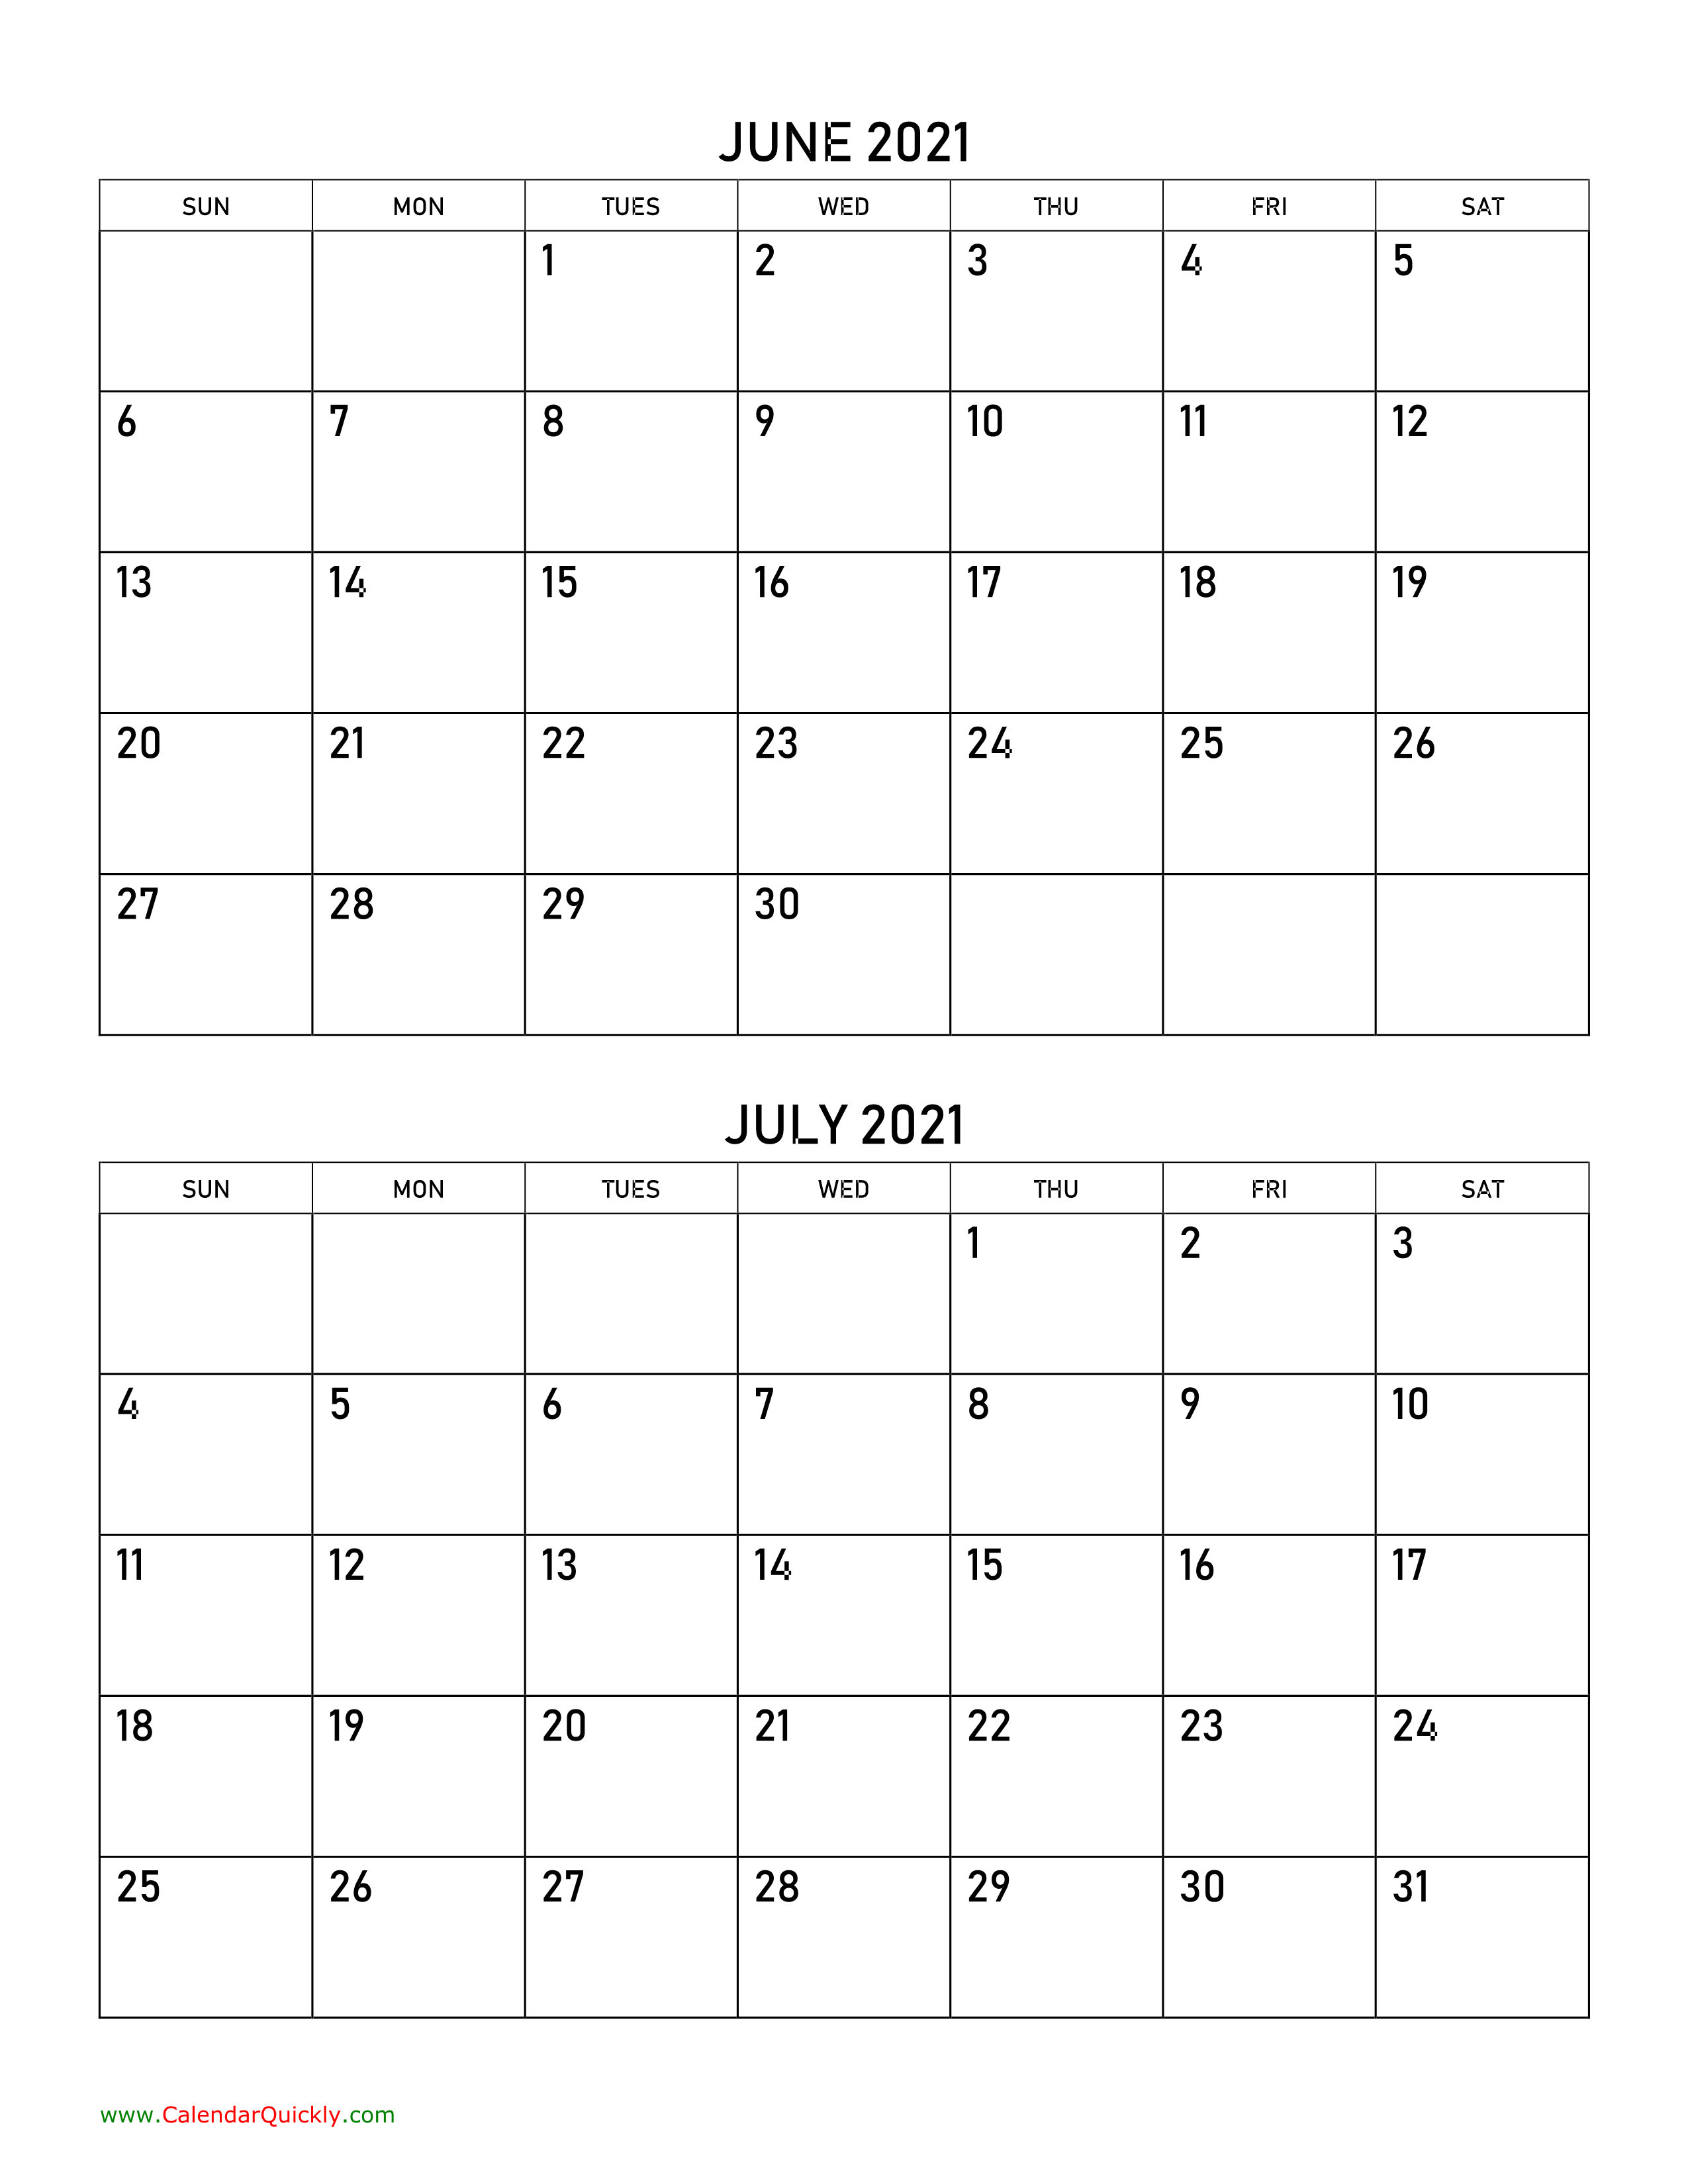 June and July 2021 Calendar | Calendar Quickly